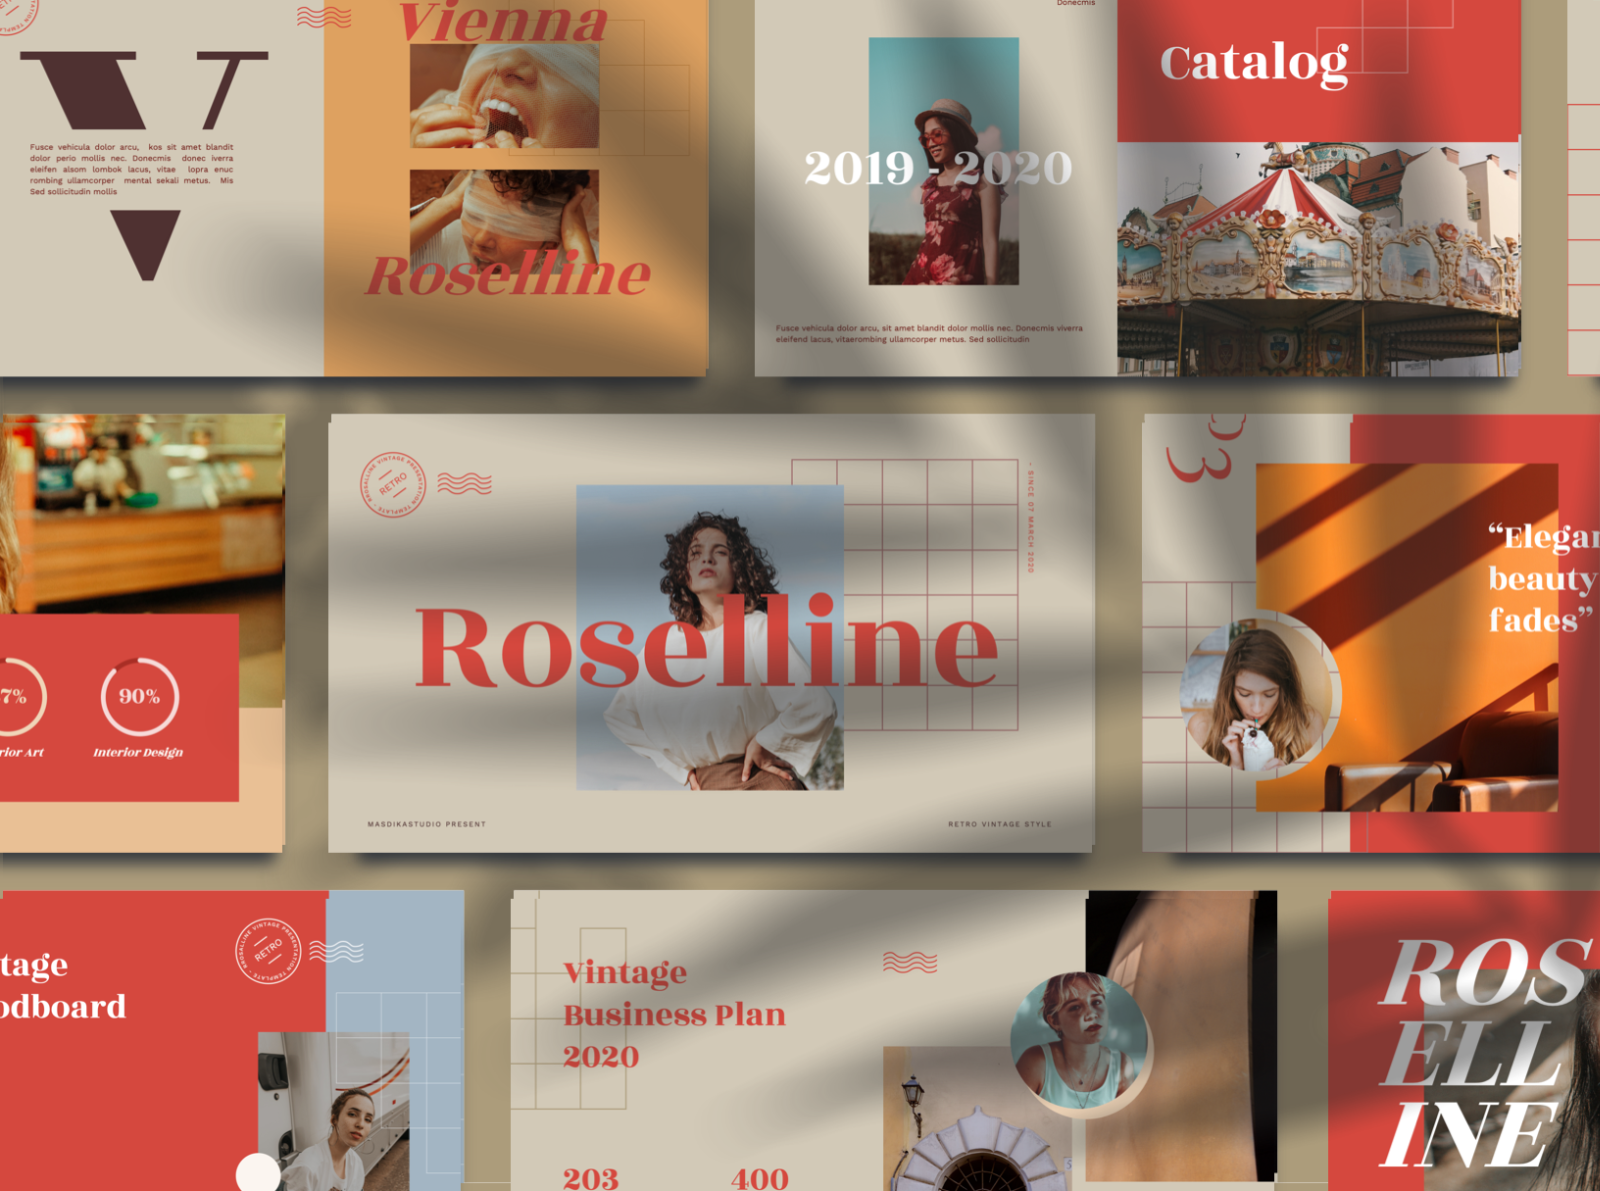 roselline-vintage-retro-powerpoint-template-by-masdika-studio-on-dribbble